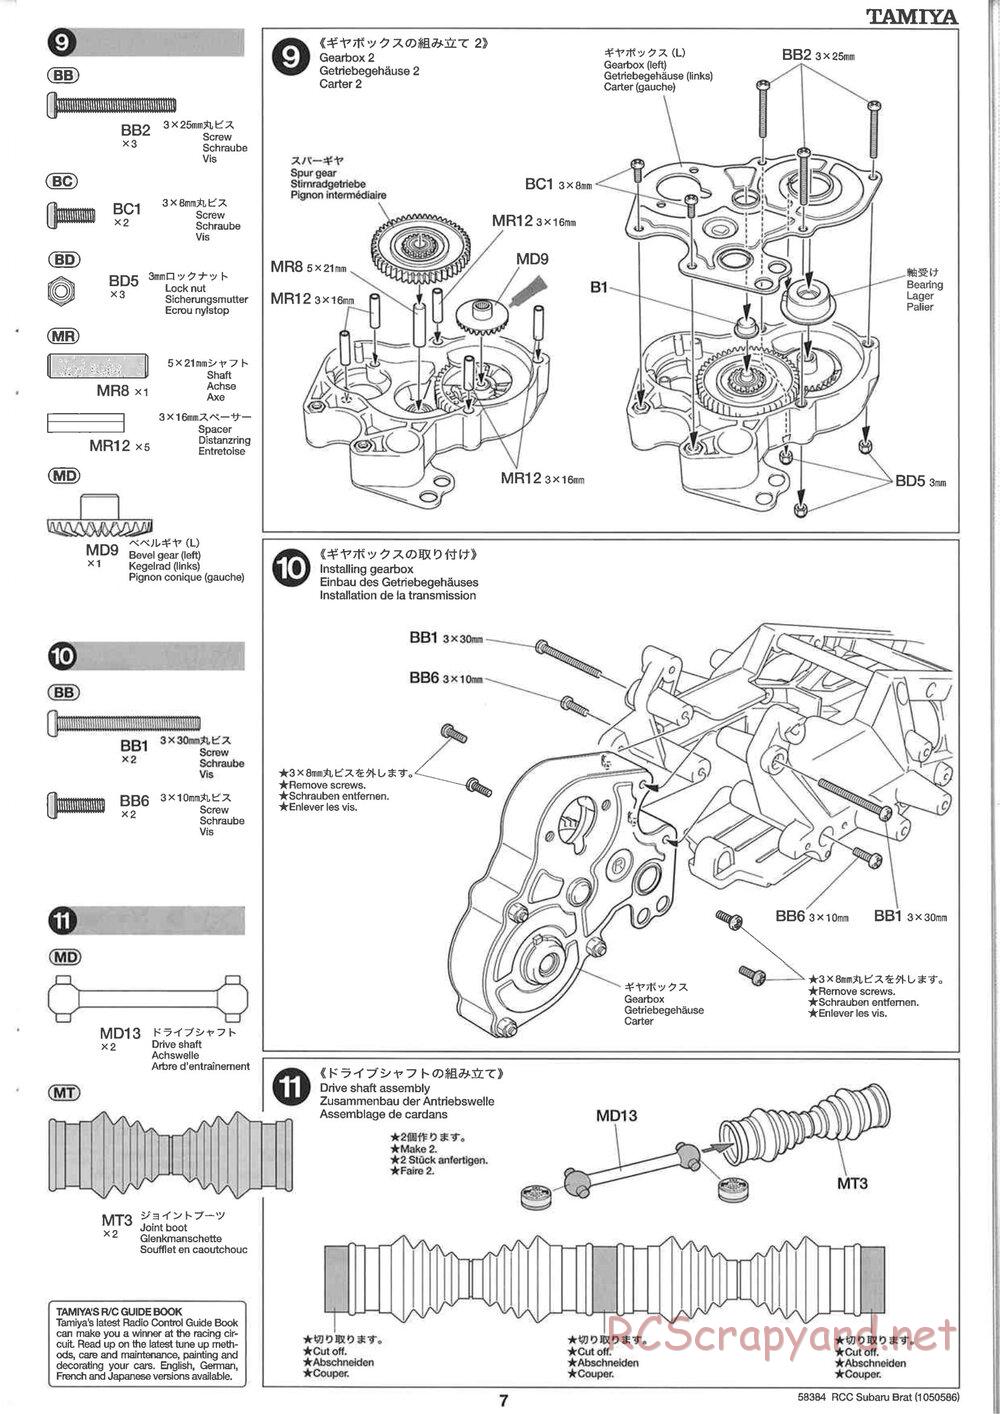 Tamiya - Subaru Brat 2007 - ORV Chassis - Manual - Page 7